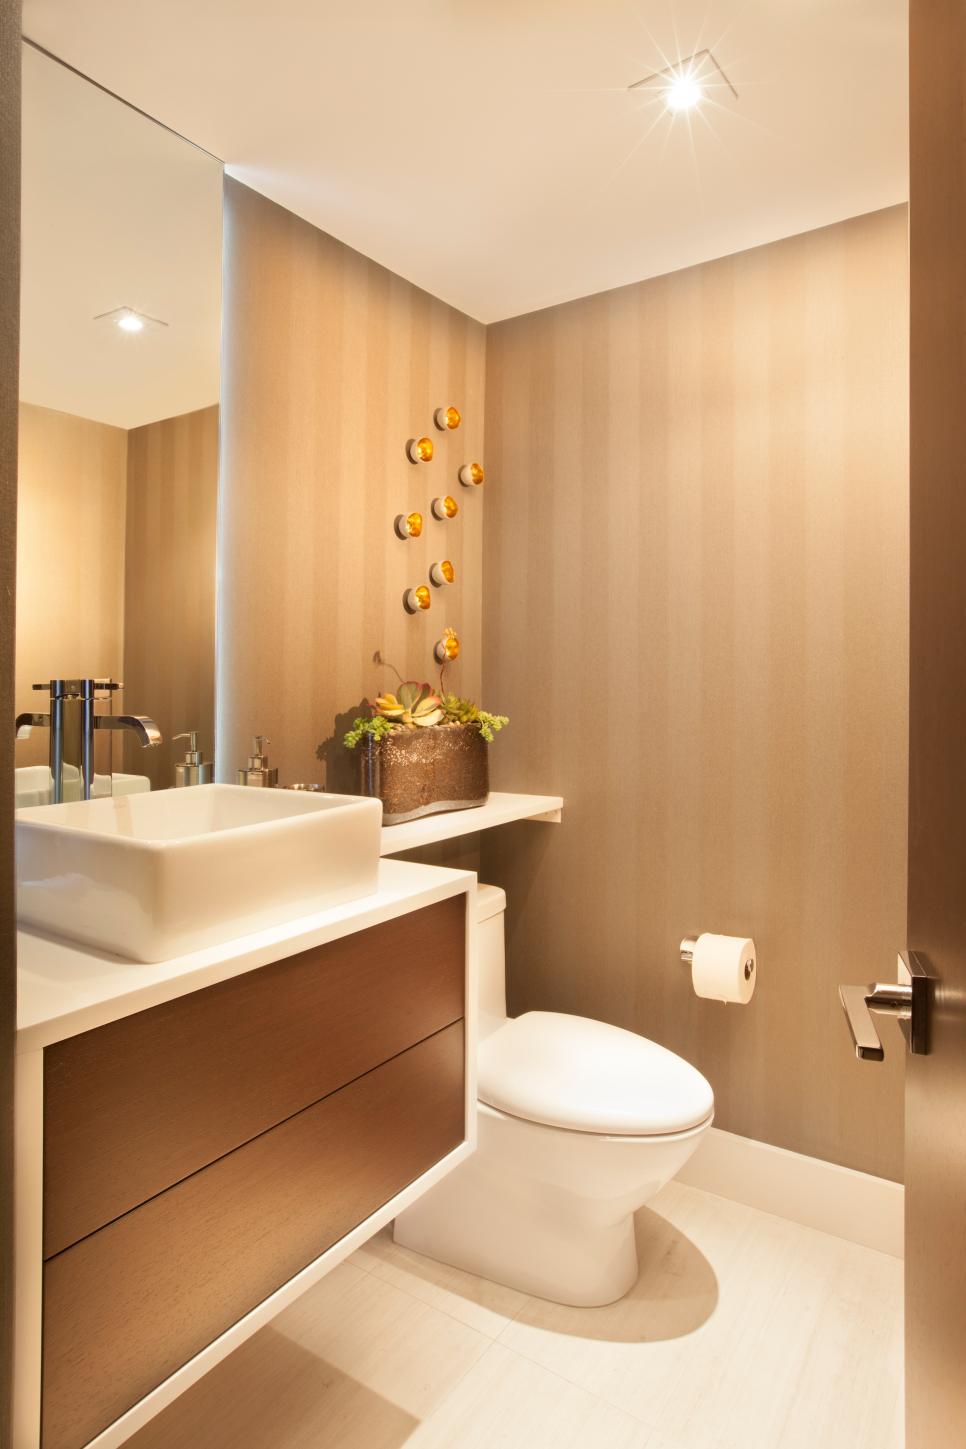 Modern Bathroom Feels Spacious, Clean in Neutral Tones | HGTV